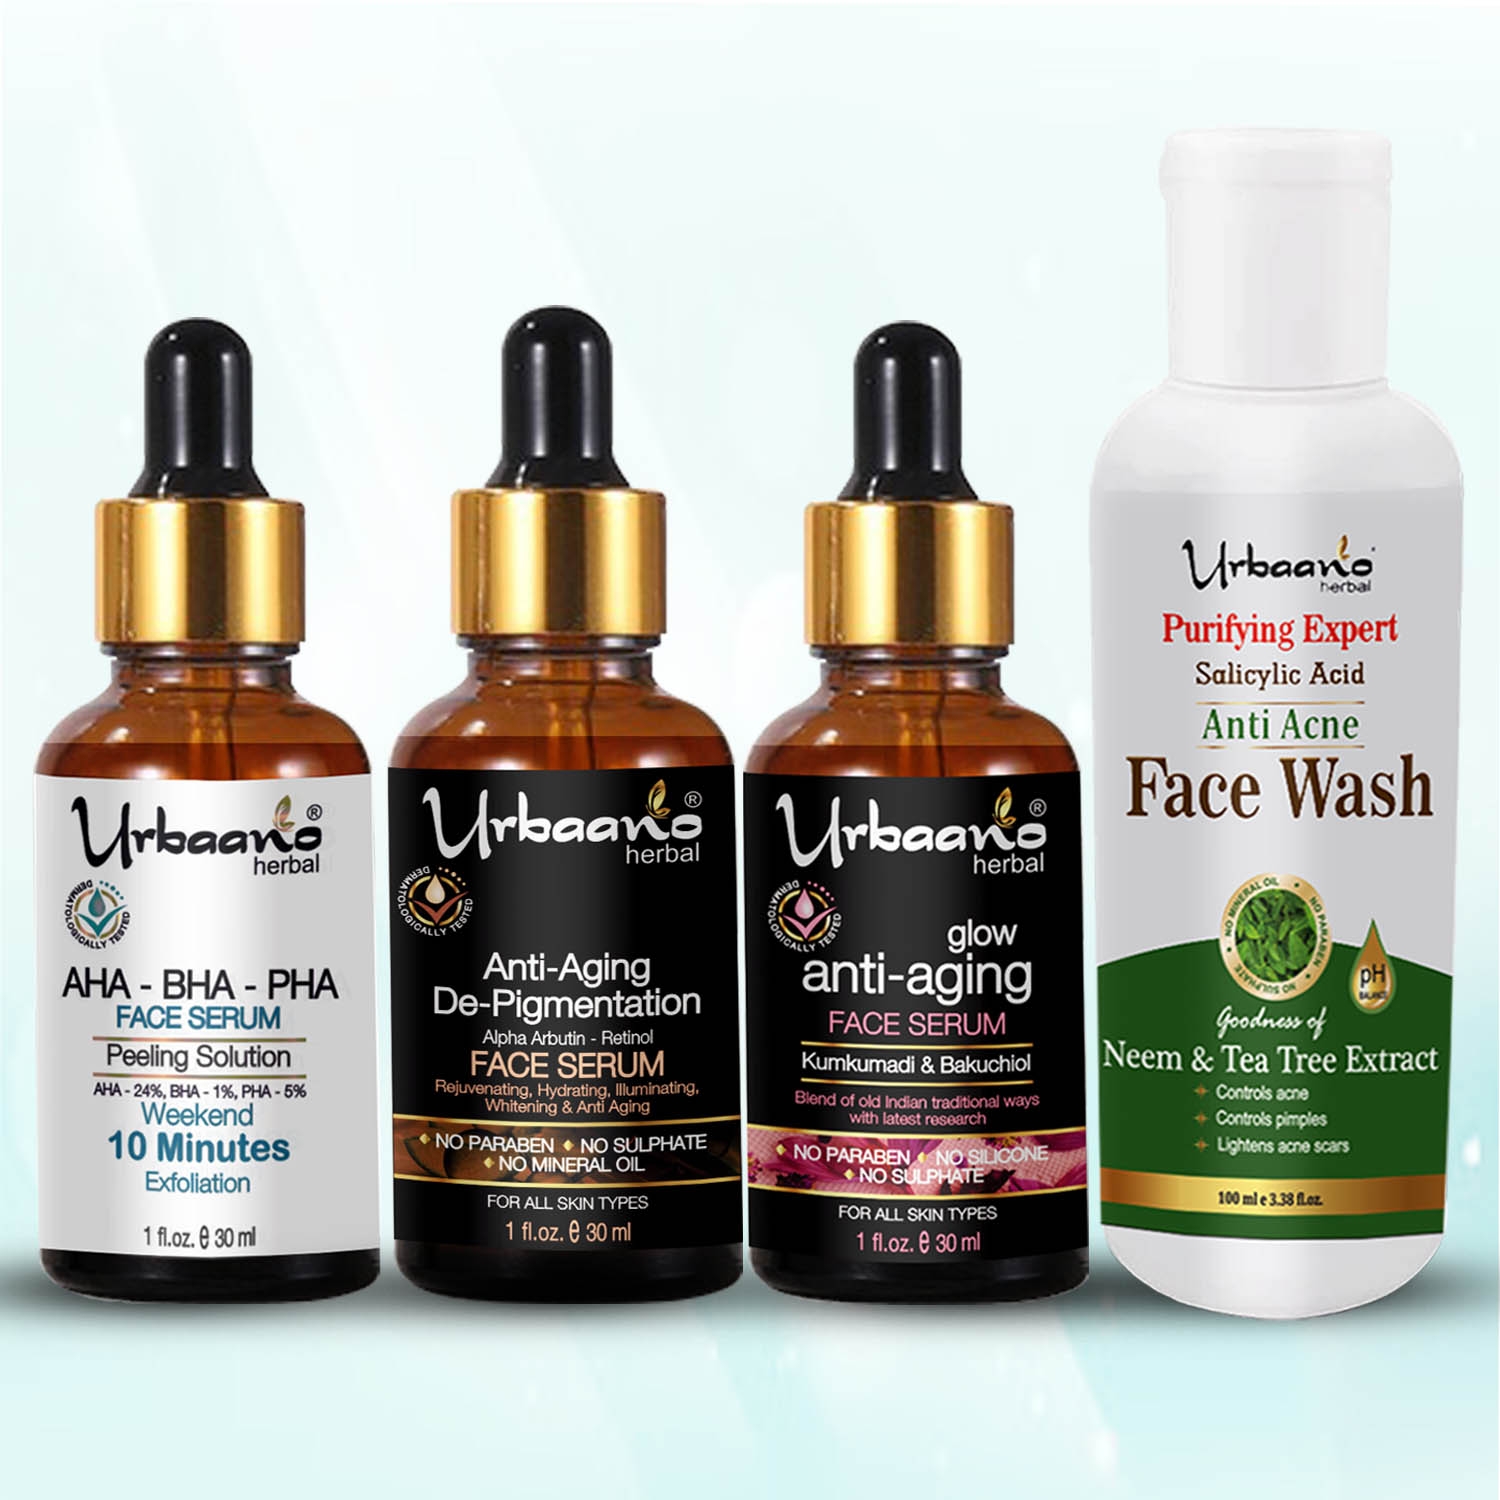 Urbaano Herbal Arbutin Vitamin C Face Serum, AHA BHA Peeling Solution, Kumkumadi Tailam & Anti Acne Face Wash -190ml- Pocket Friendly Combo Pack of 4